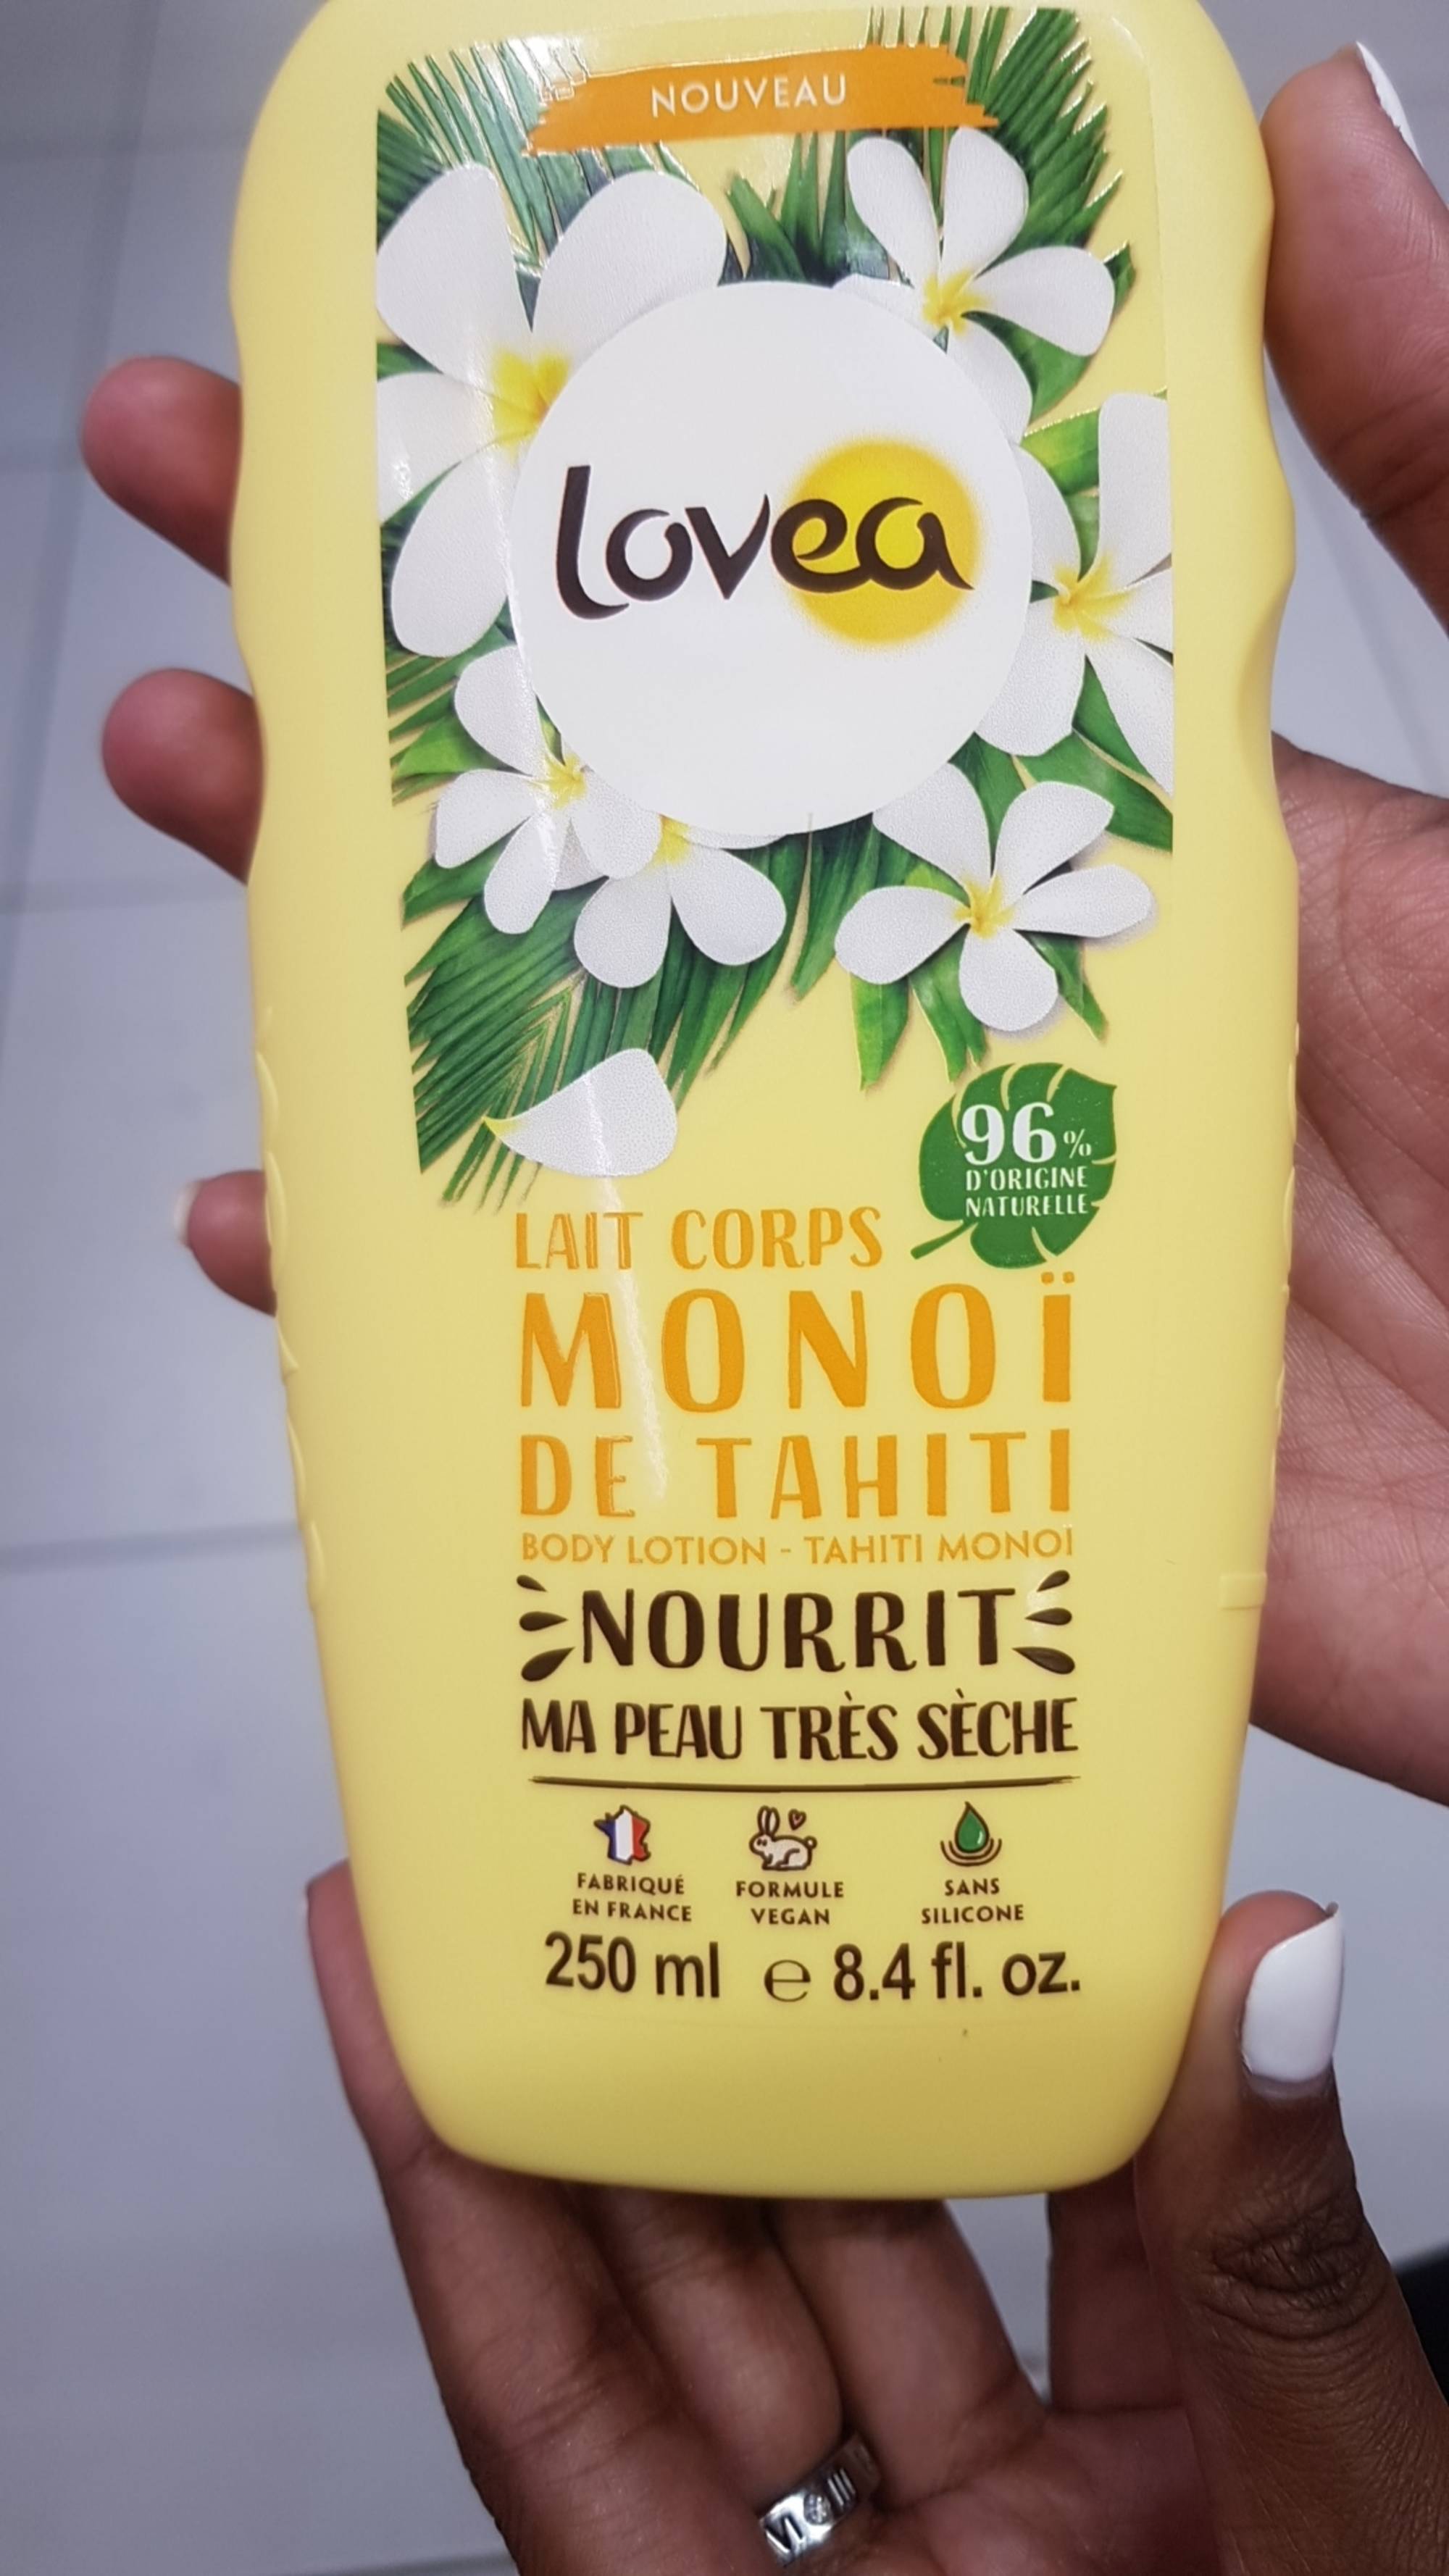 Lovea Lait Corps Monoï de Tahiti - 250ml